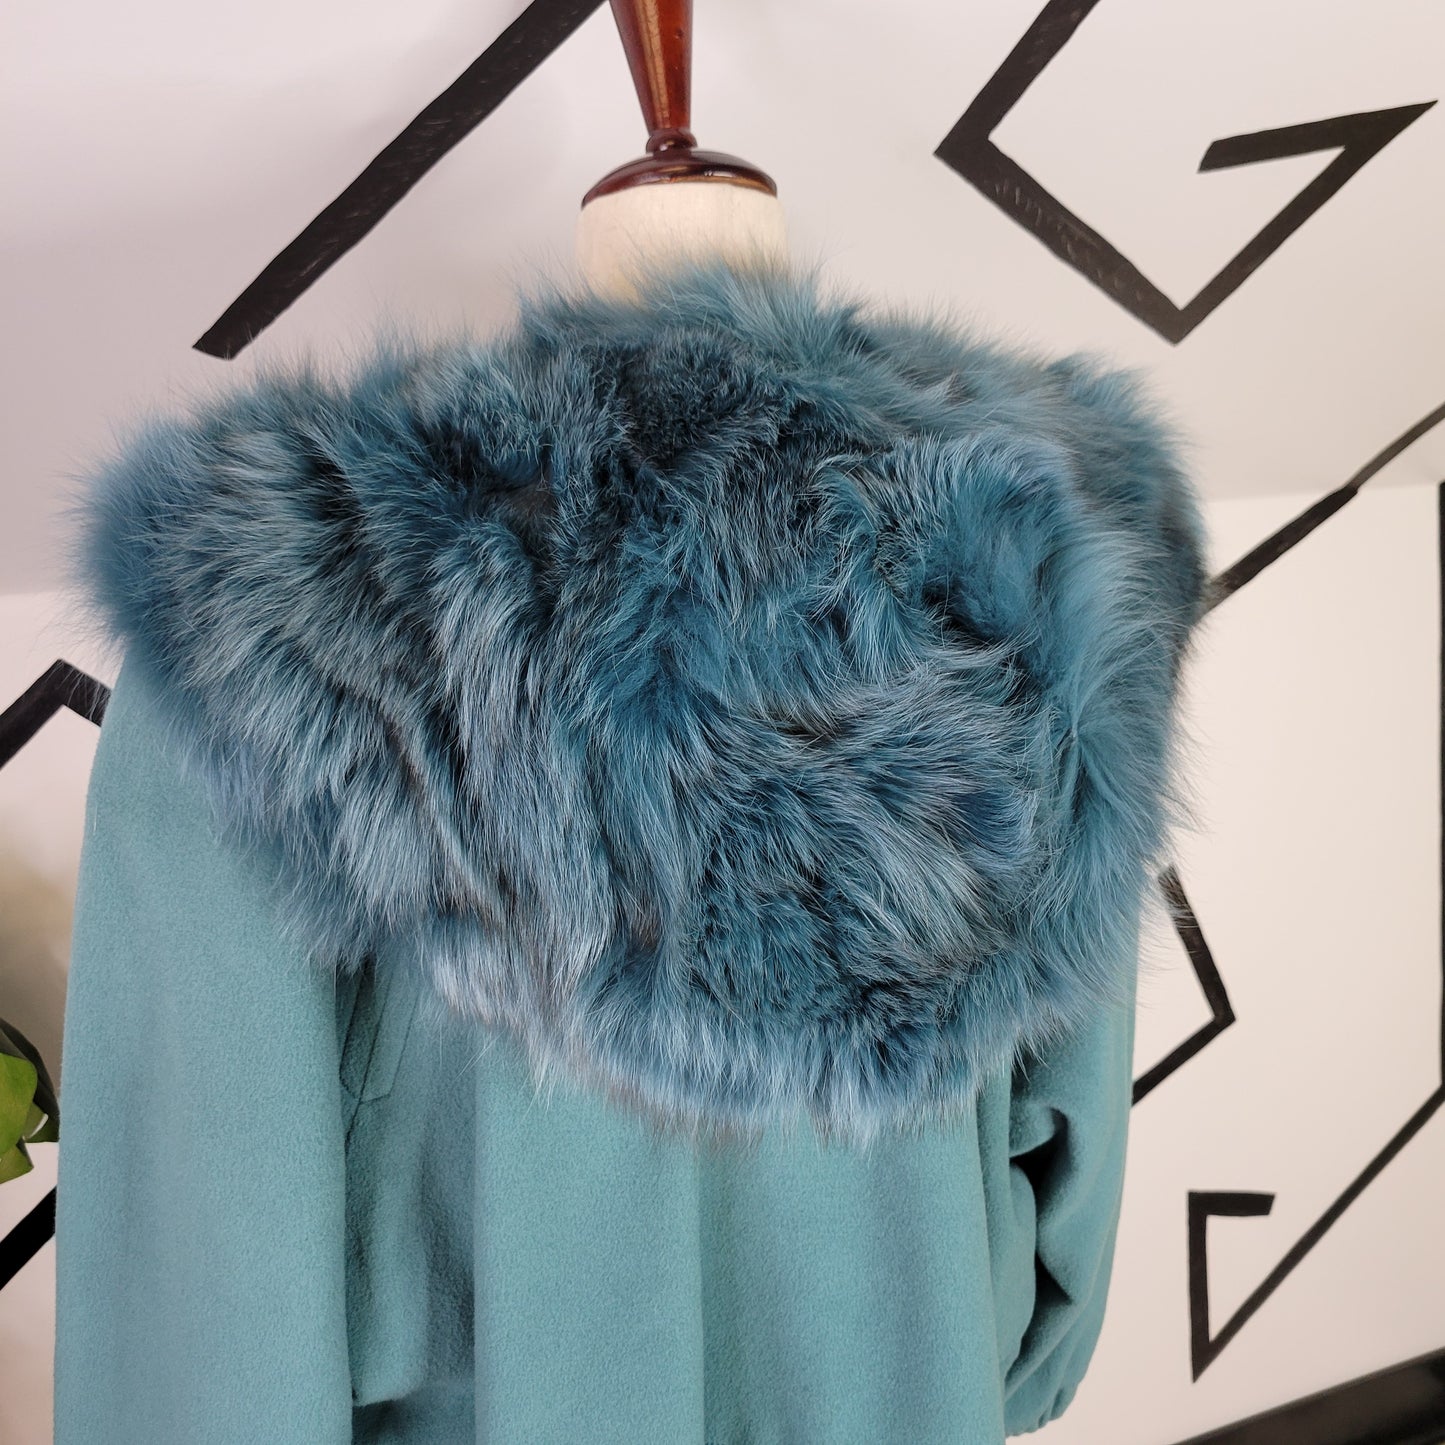 C&A Vintage Dusty Blue Wool Coat with Blue Faux Fur Hood - size EU 40